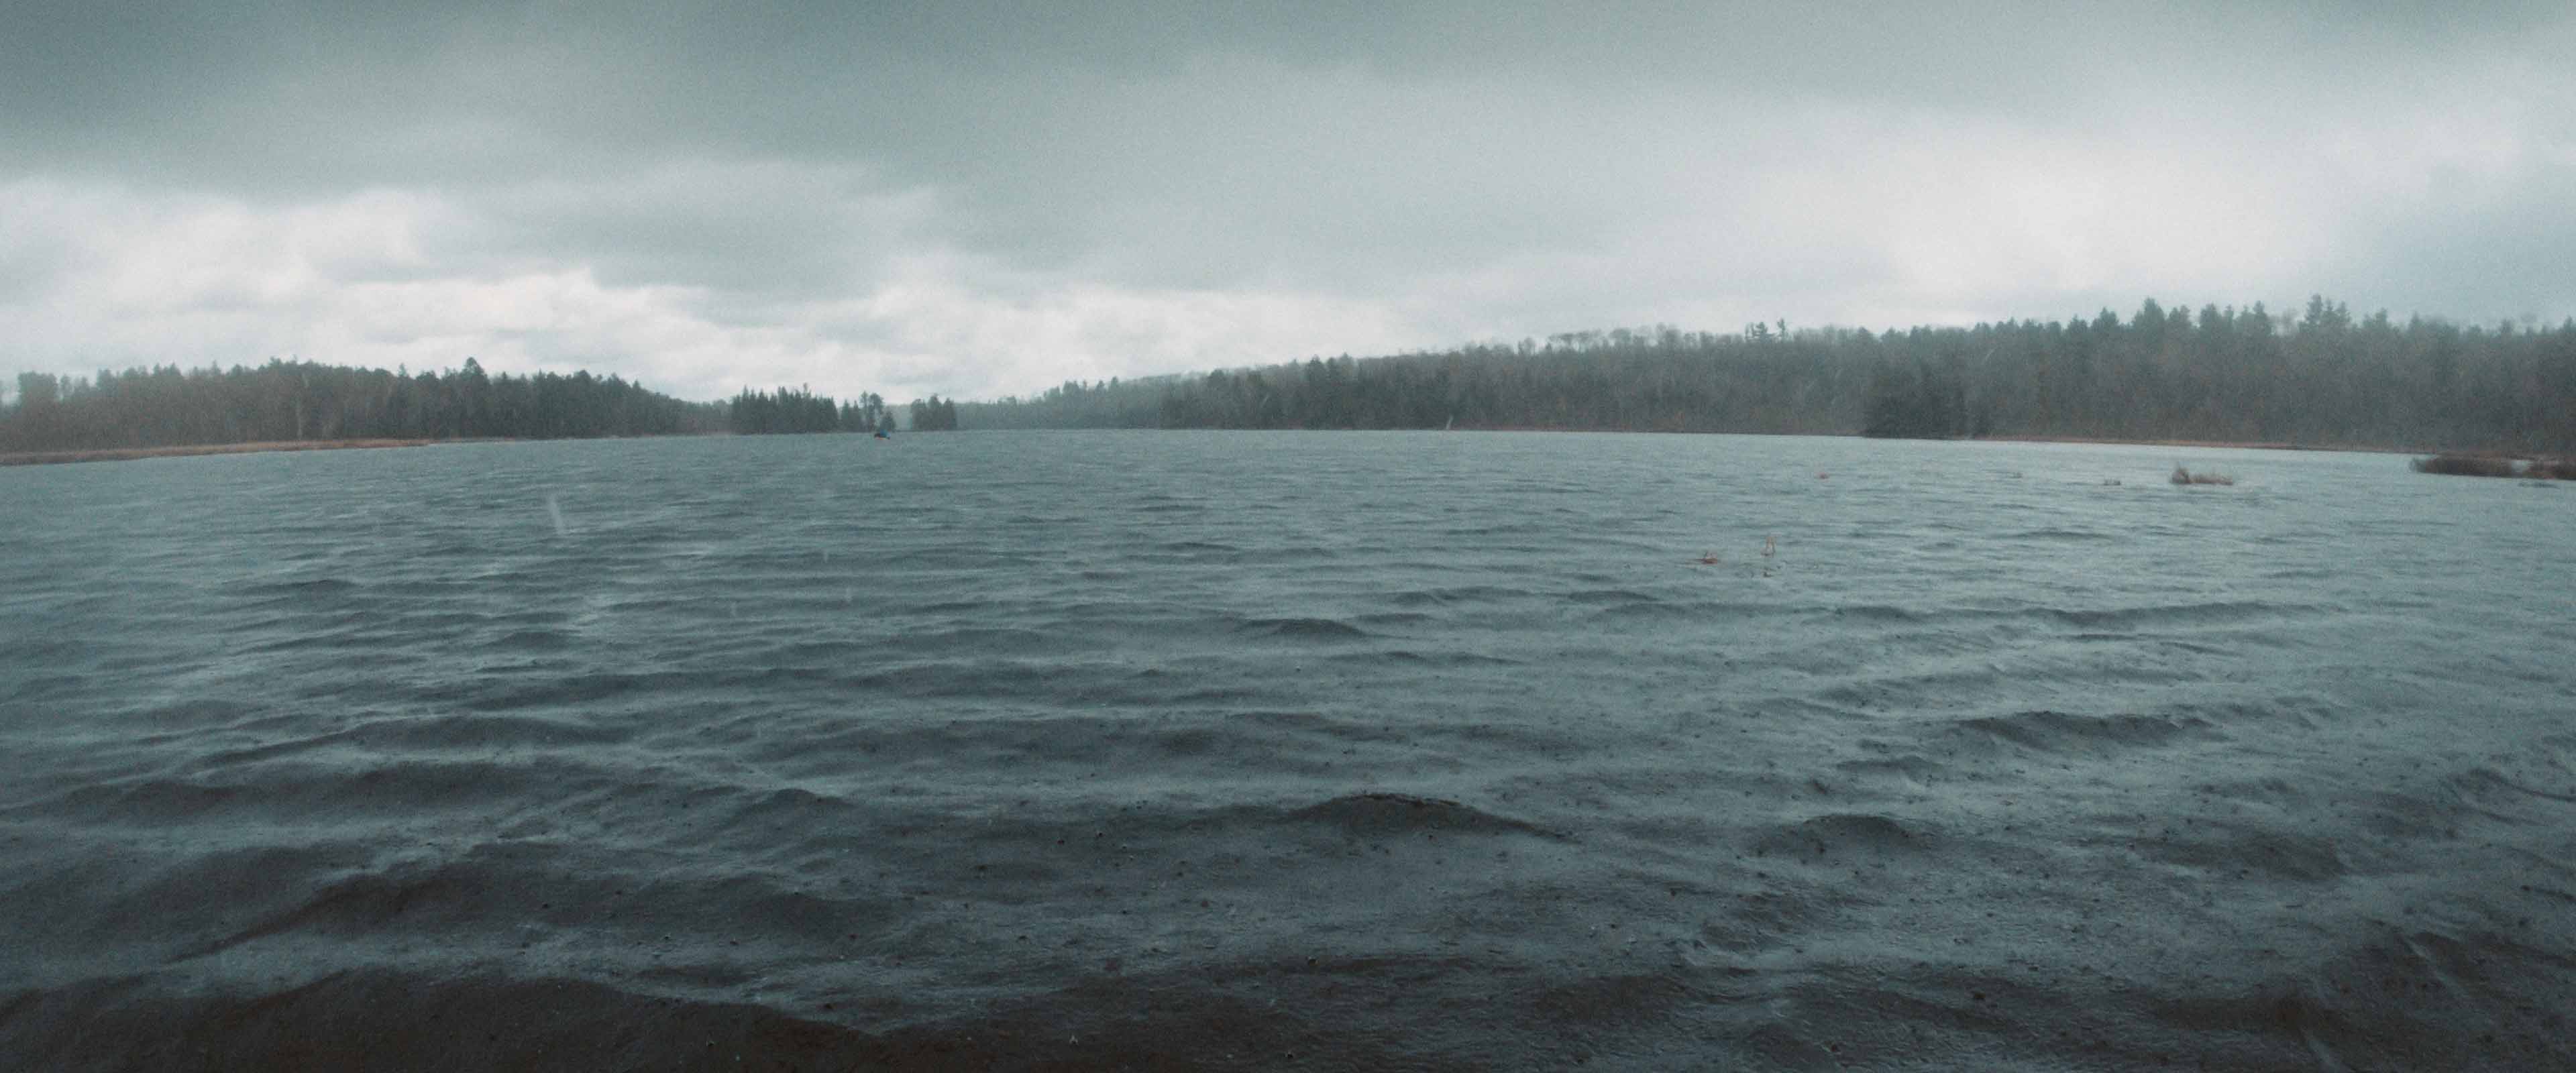 finding-rhythm-outdoor-documentary-canoeing-ely-minnesota